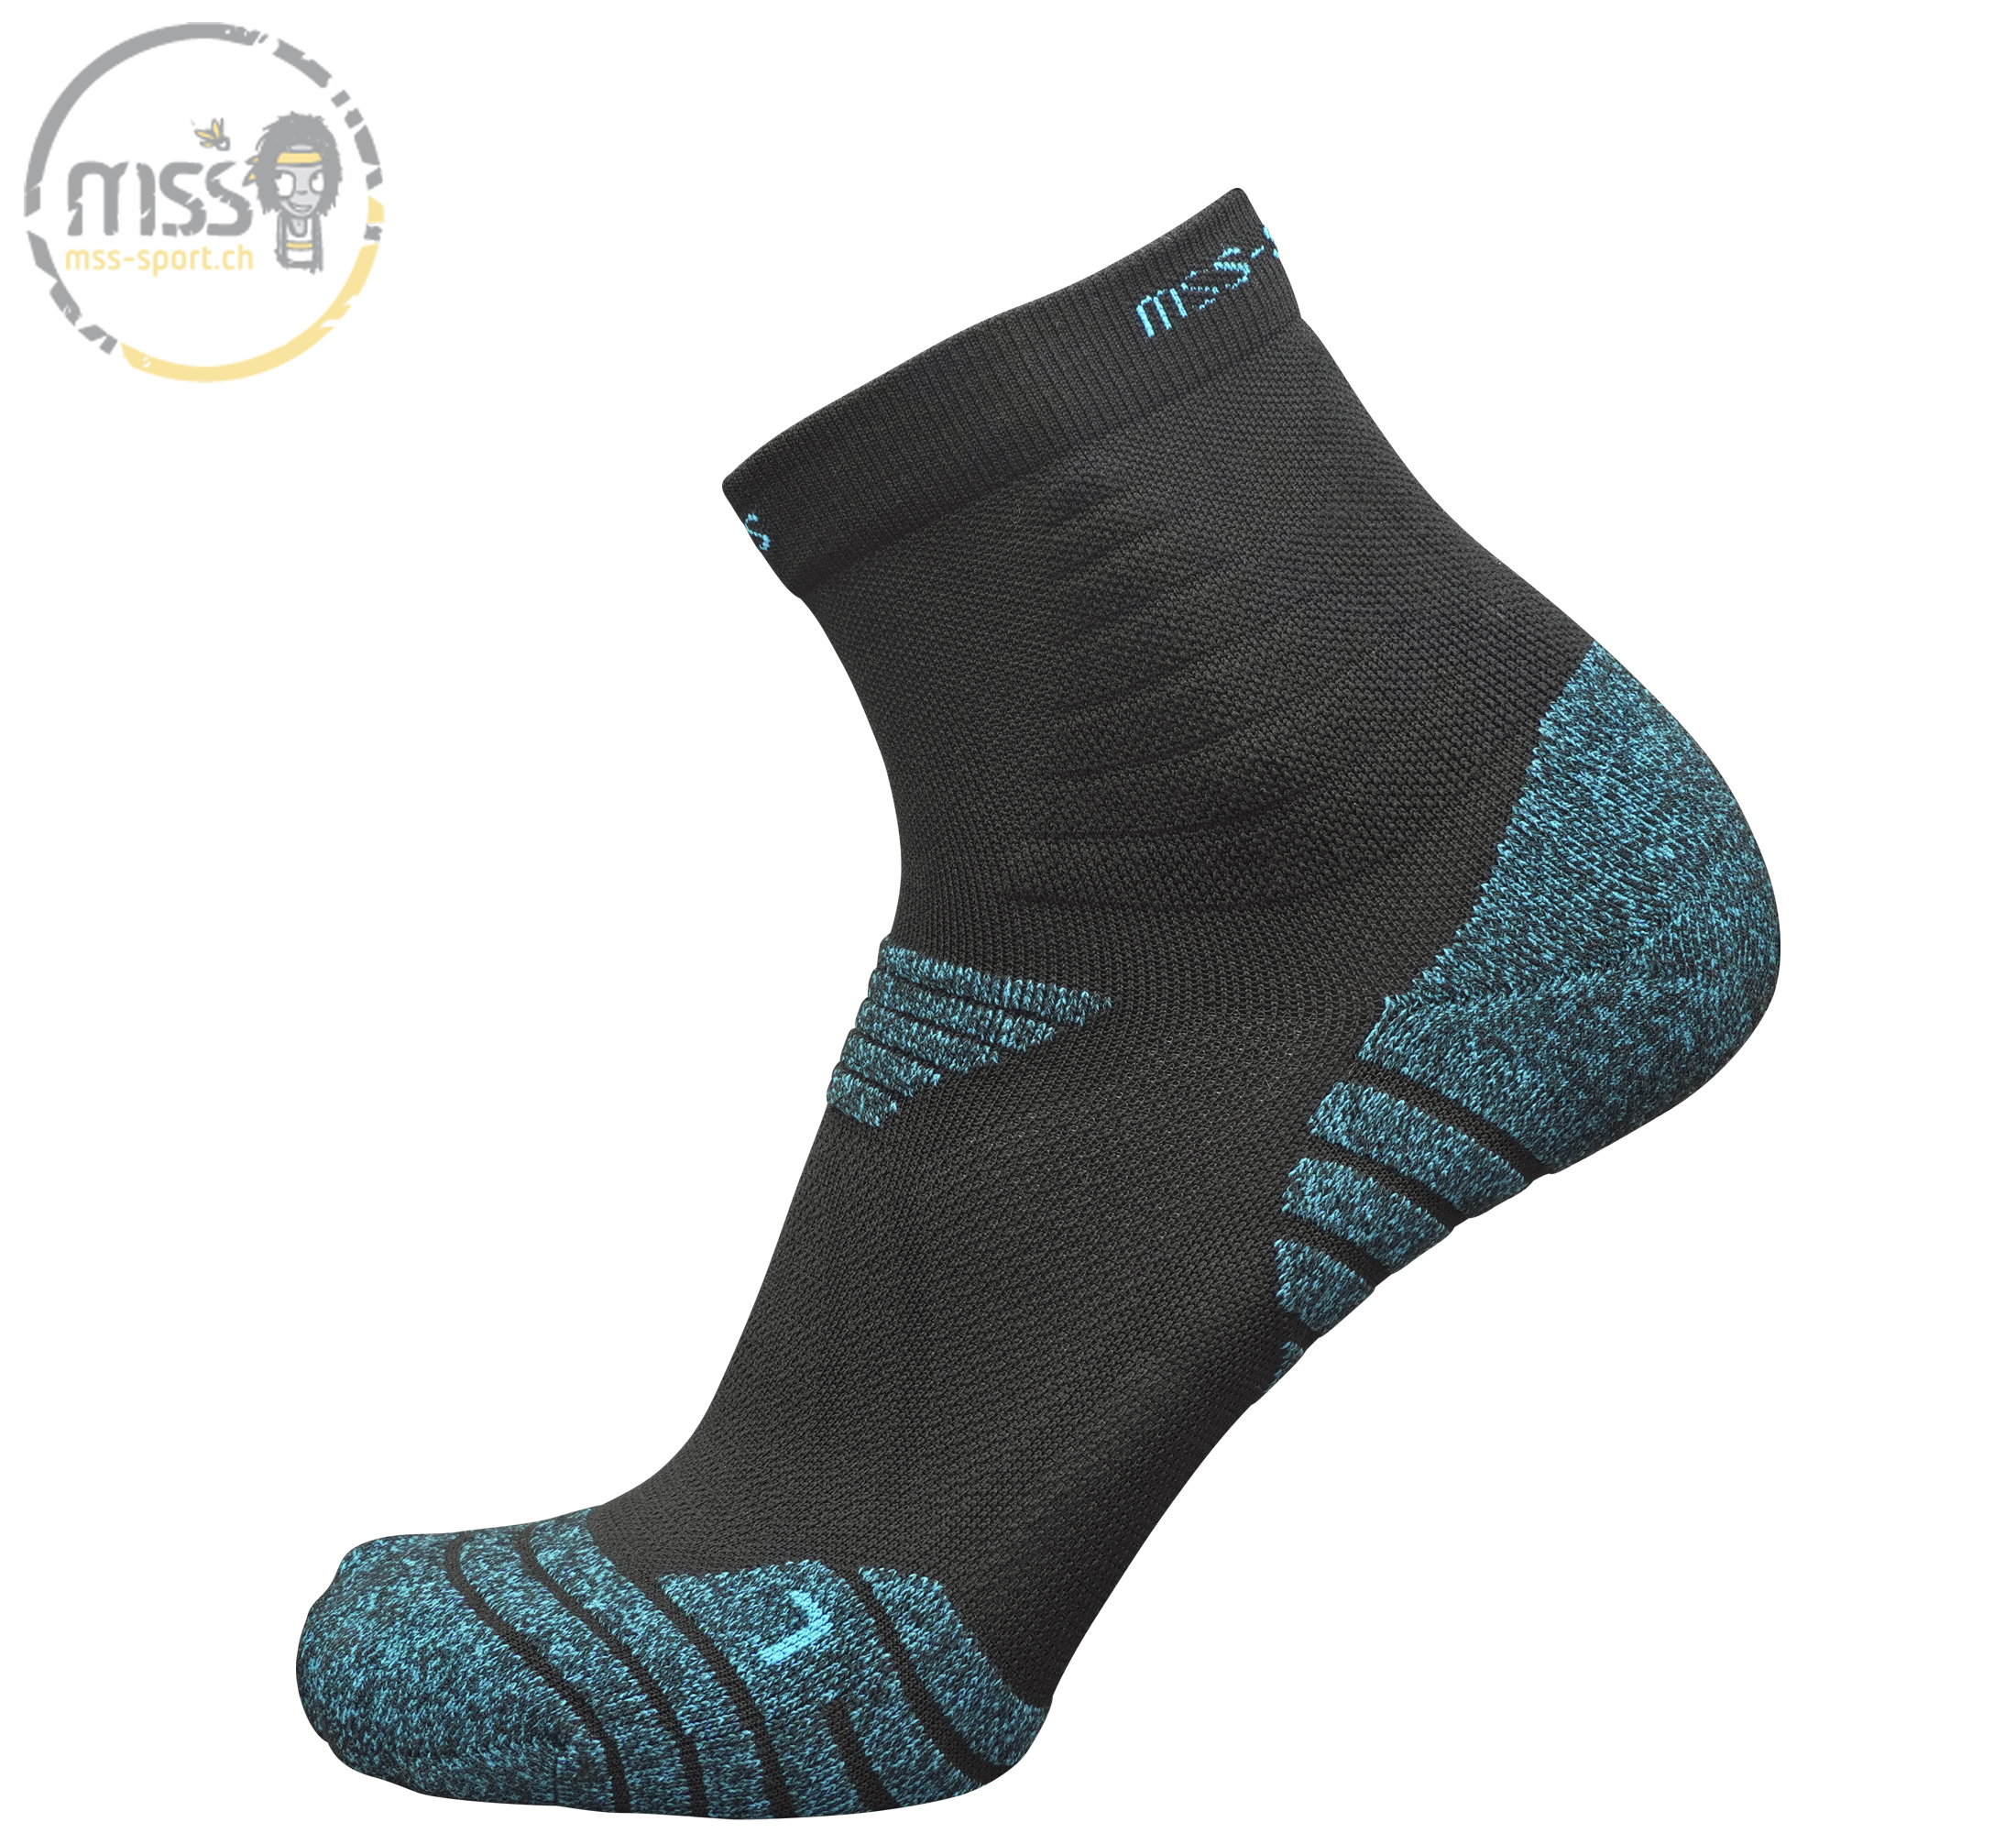 mss-socks GO 7500 mid Lady black blue